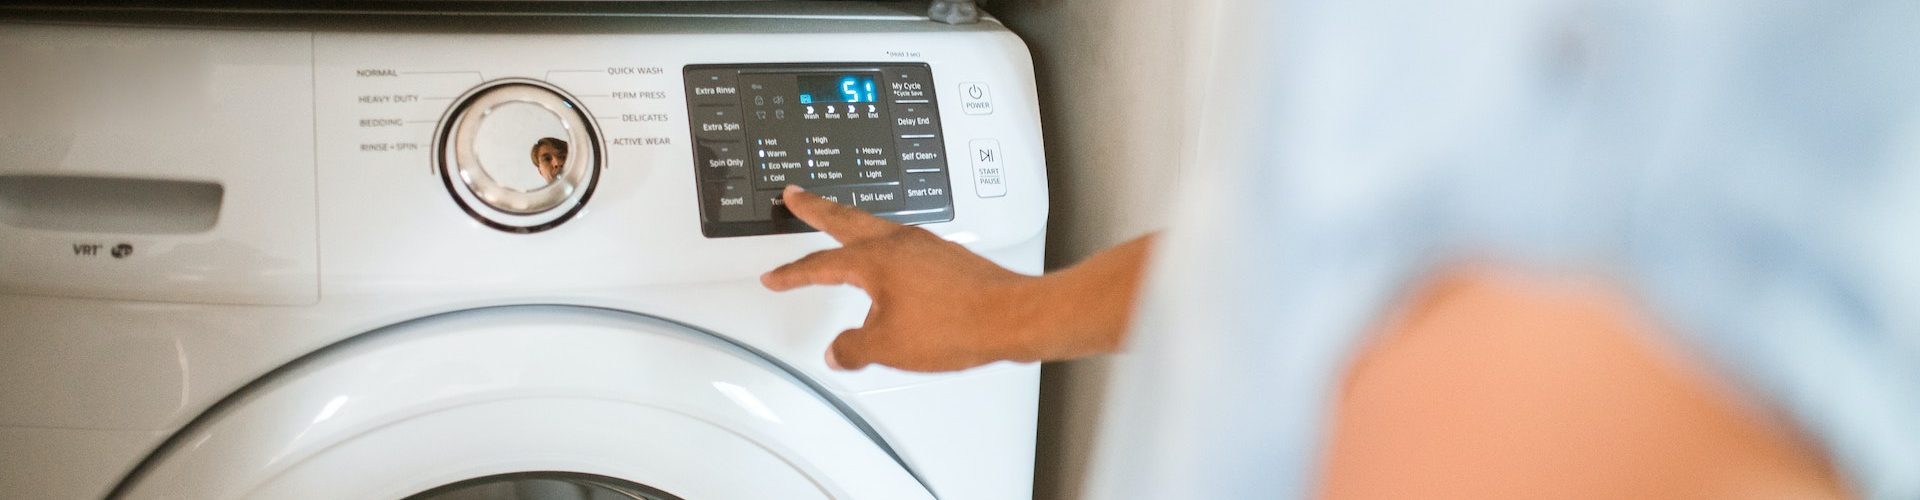 condensor mechanisme tank Coolblue Wasmachine Abonnement betekent lage lasten